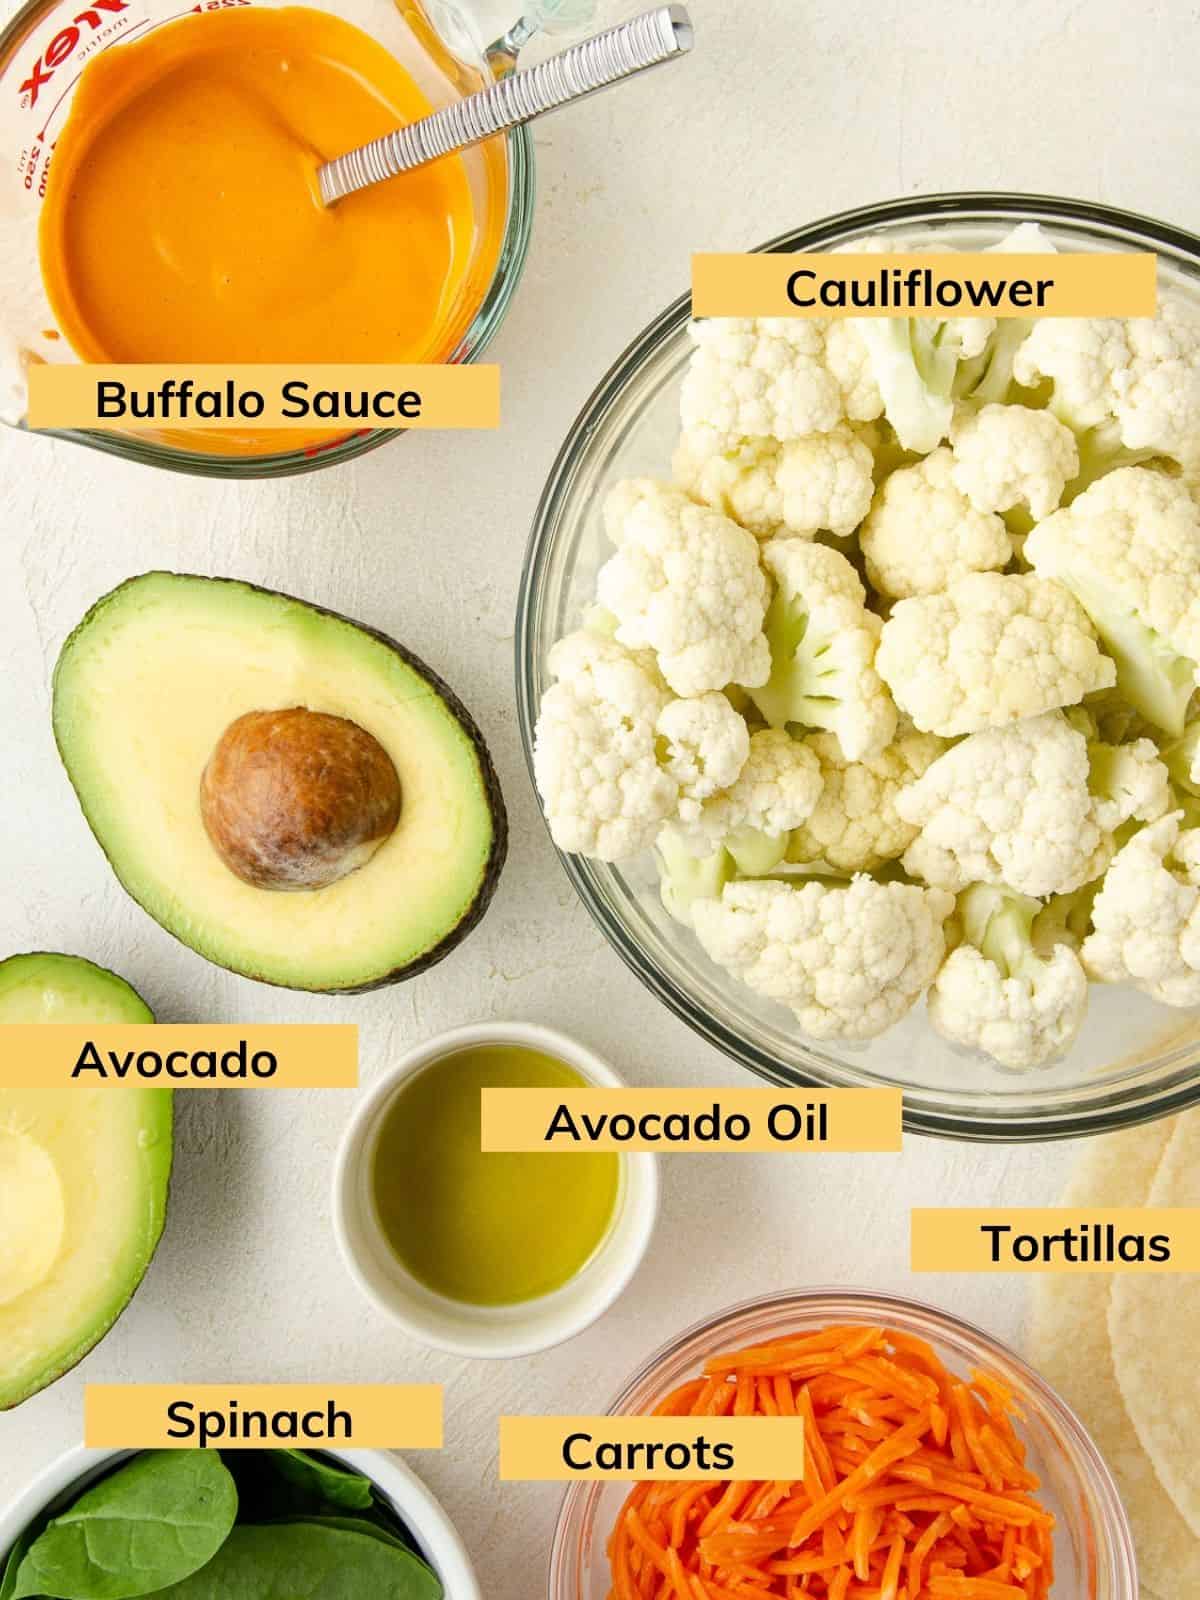 Ingredients to make a vegan wrap: cauliflower, tortilla, carrot, spinach, avocado and buffalo sauce.